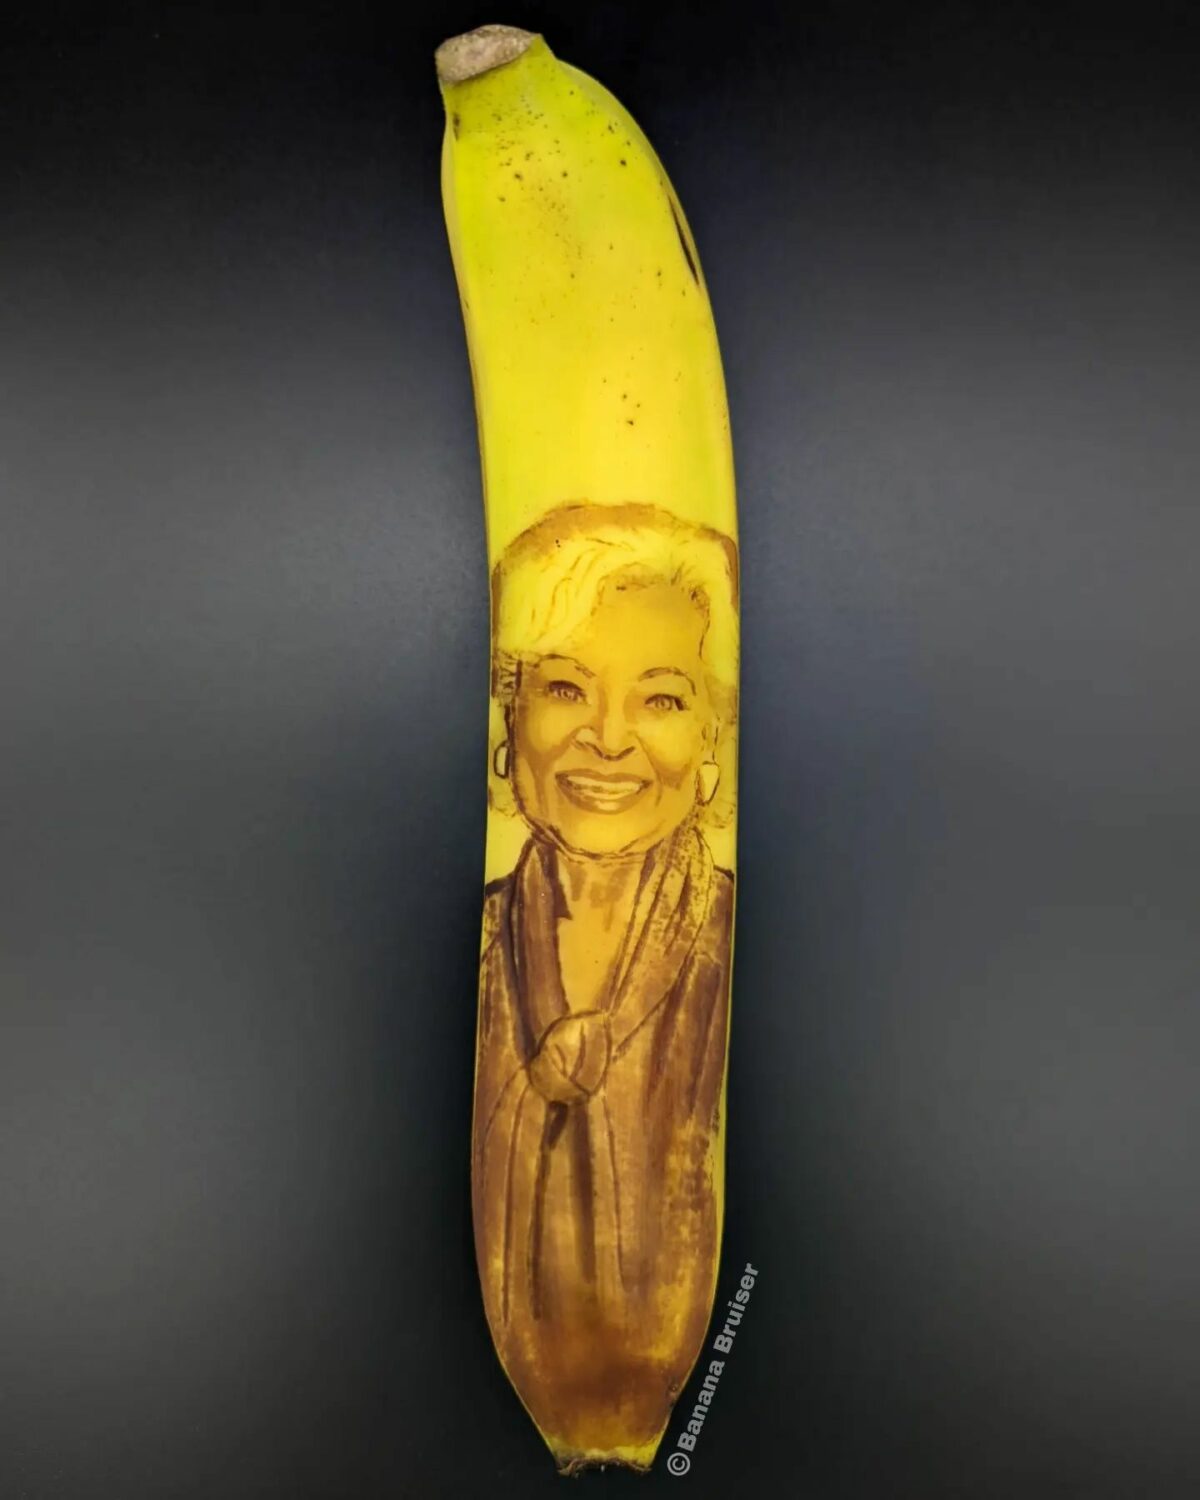 The Bruised Banana Art Of Anna Chojnicka 8